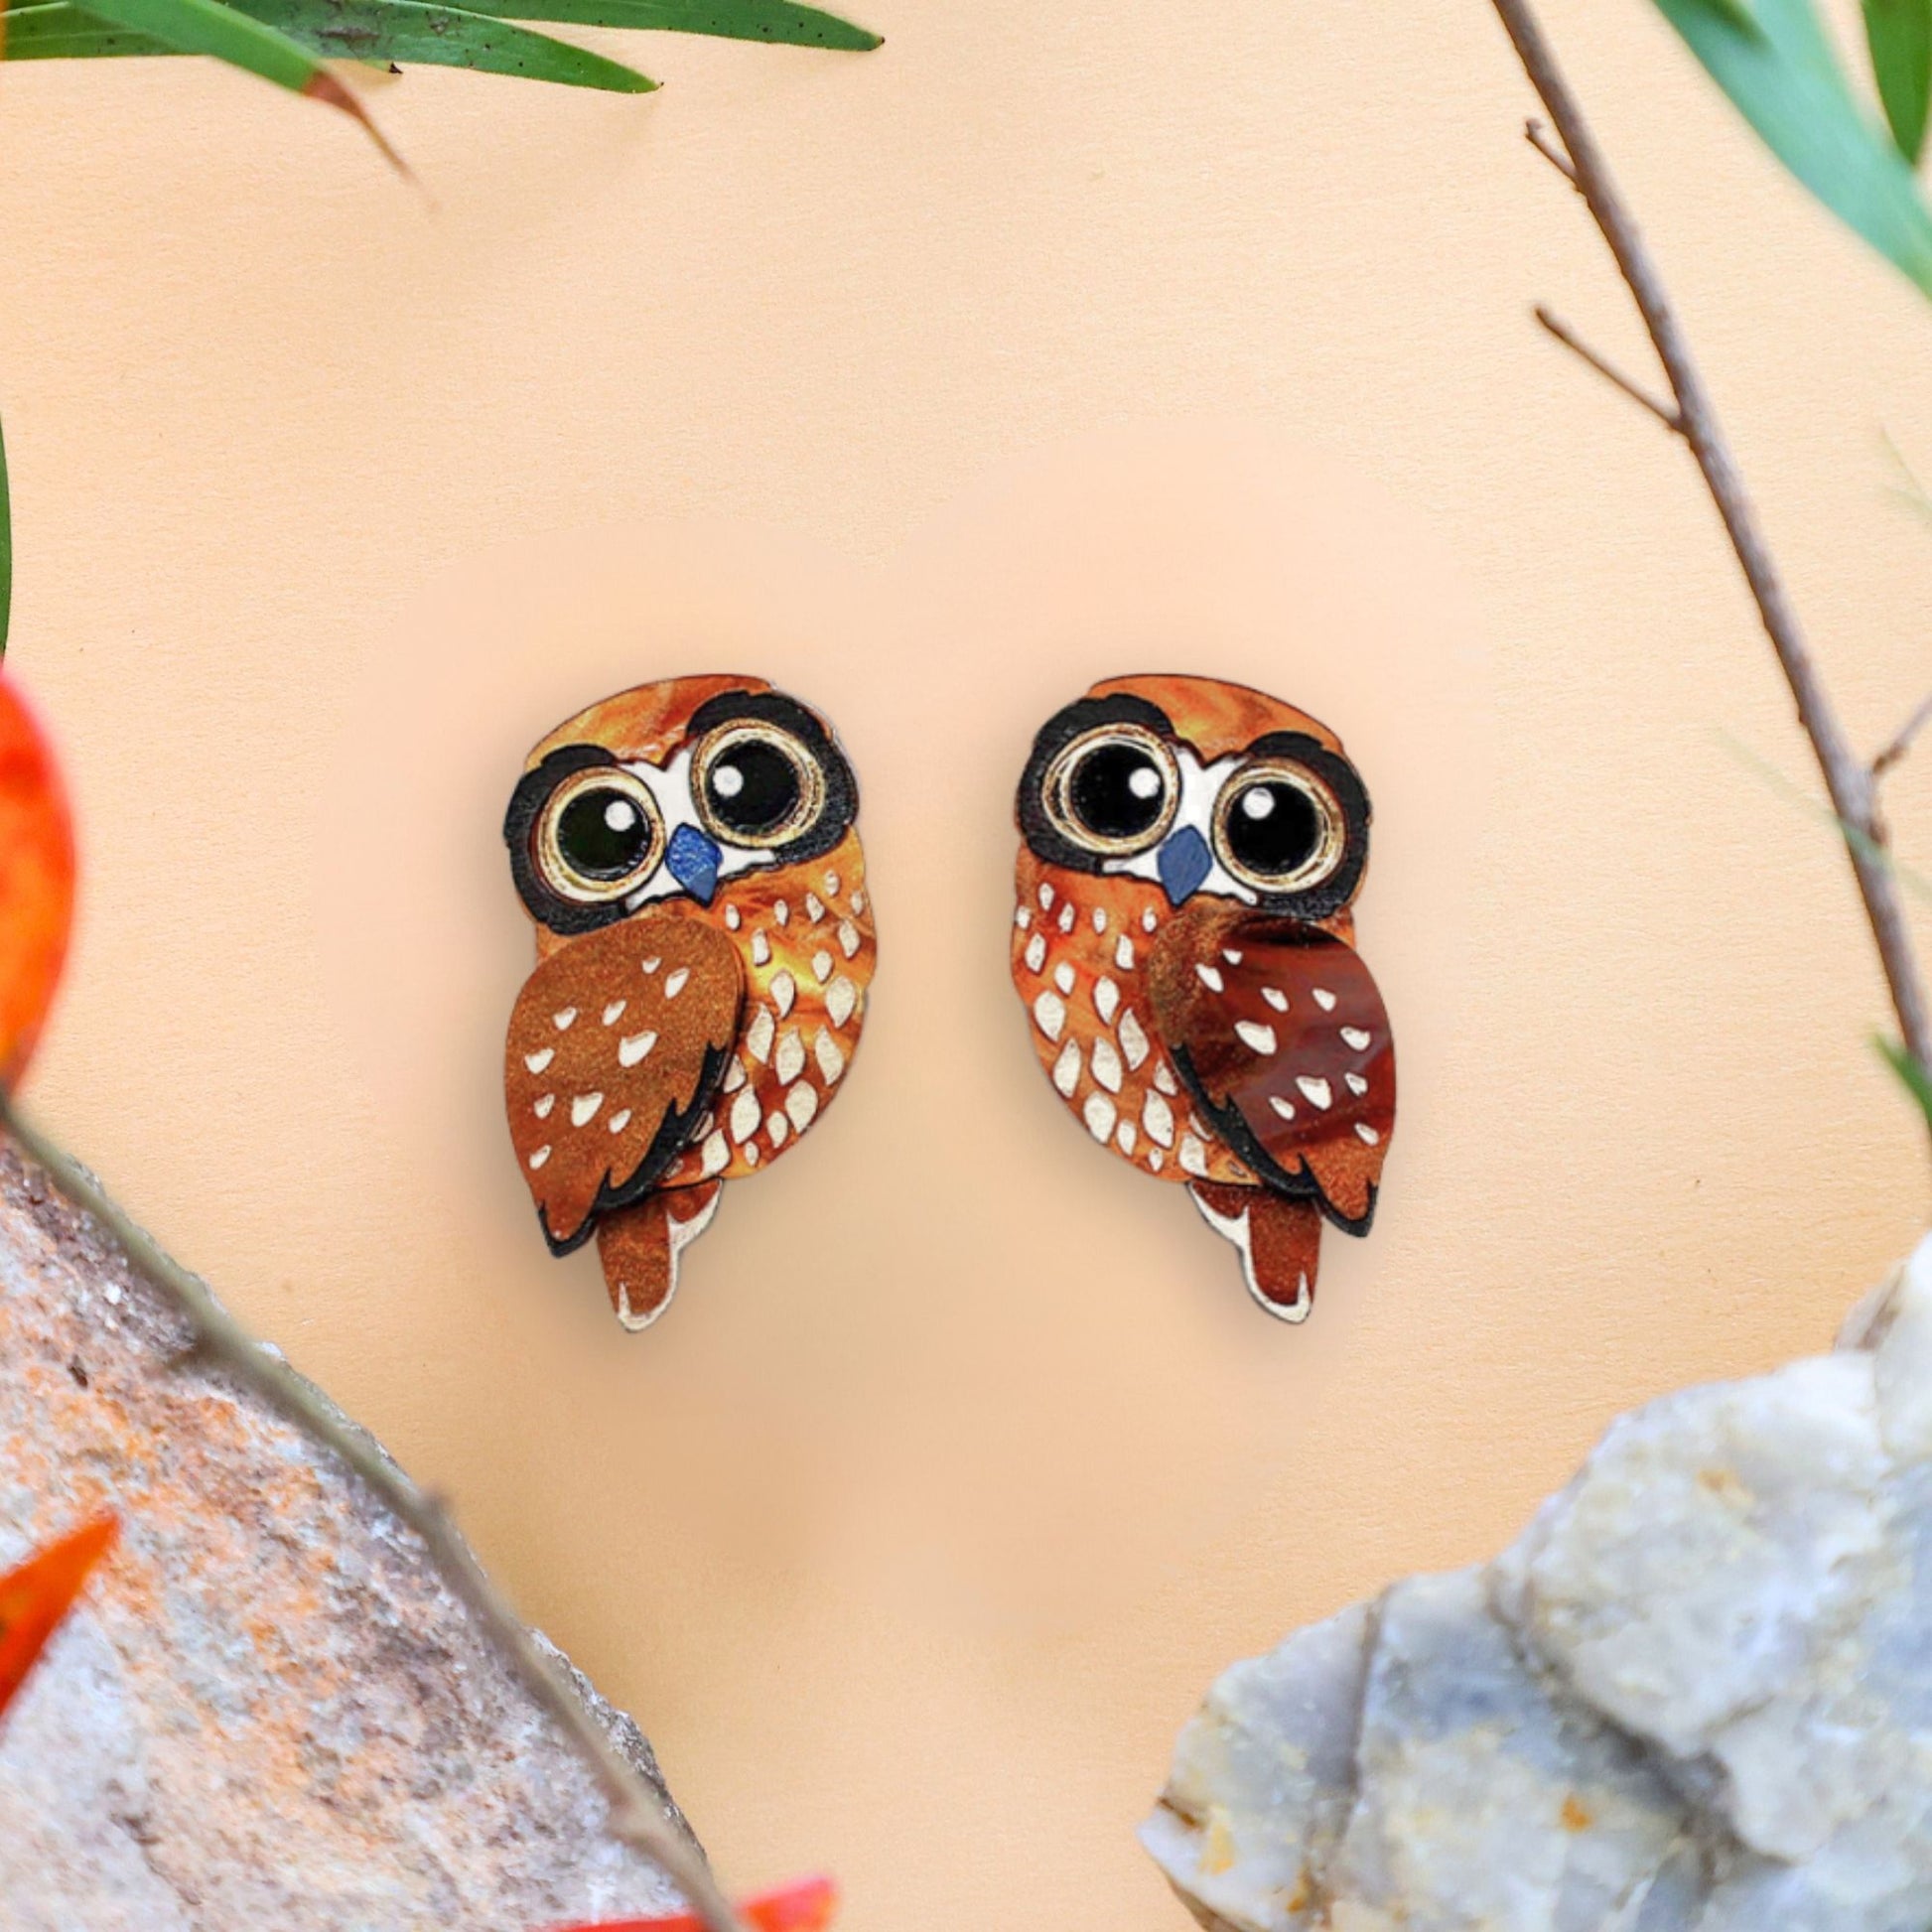 BINKABU Boobook Owl Acrylic Bird Earrings